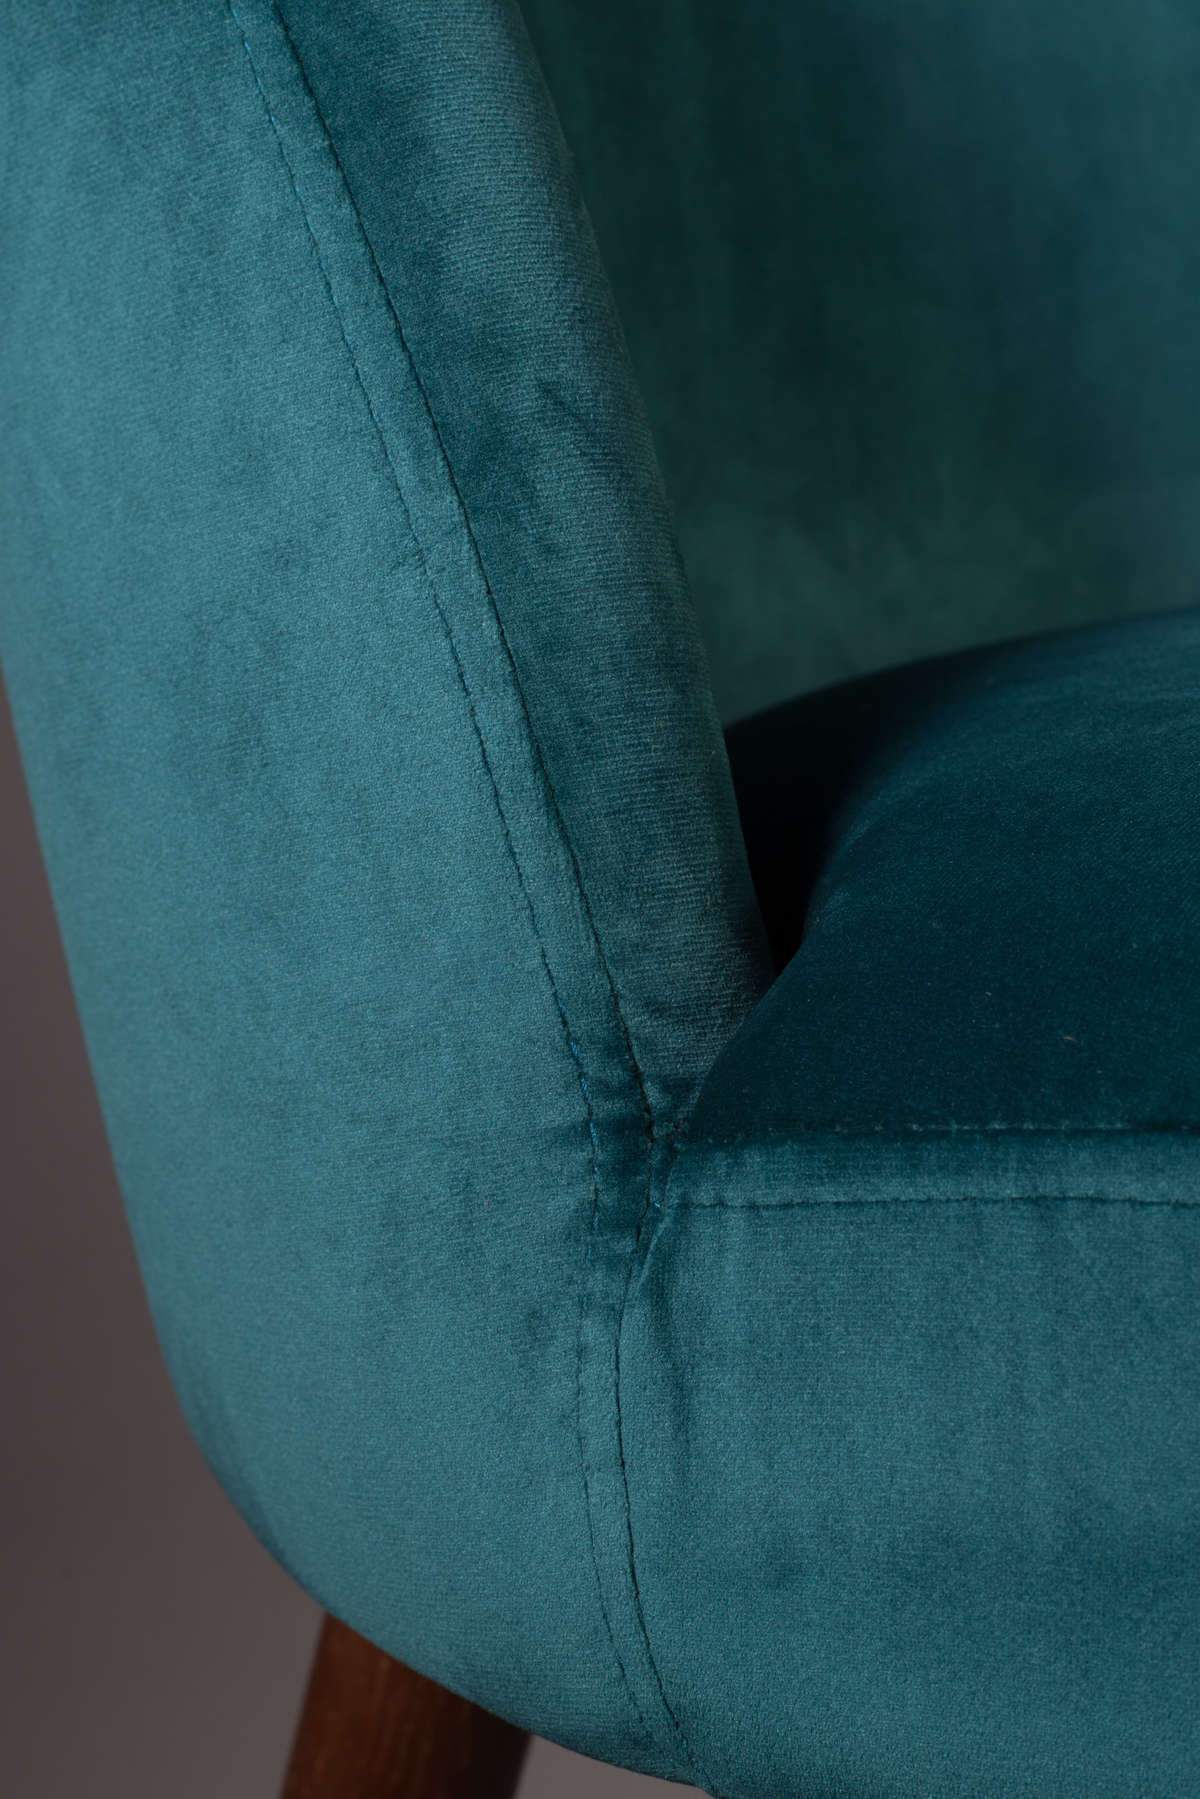 BARBARA chair blue, Dutchbone, Eye on Design